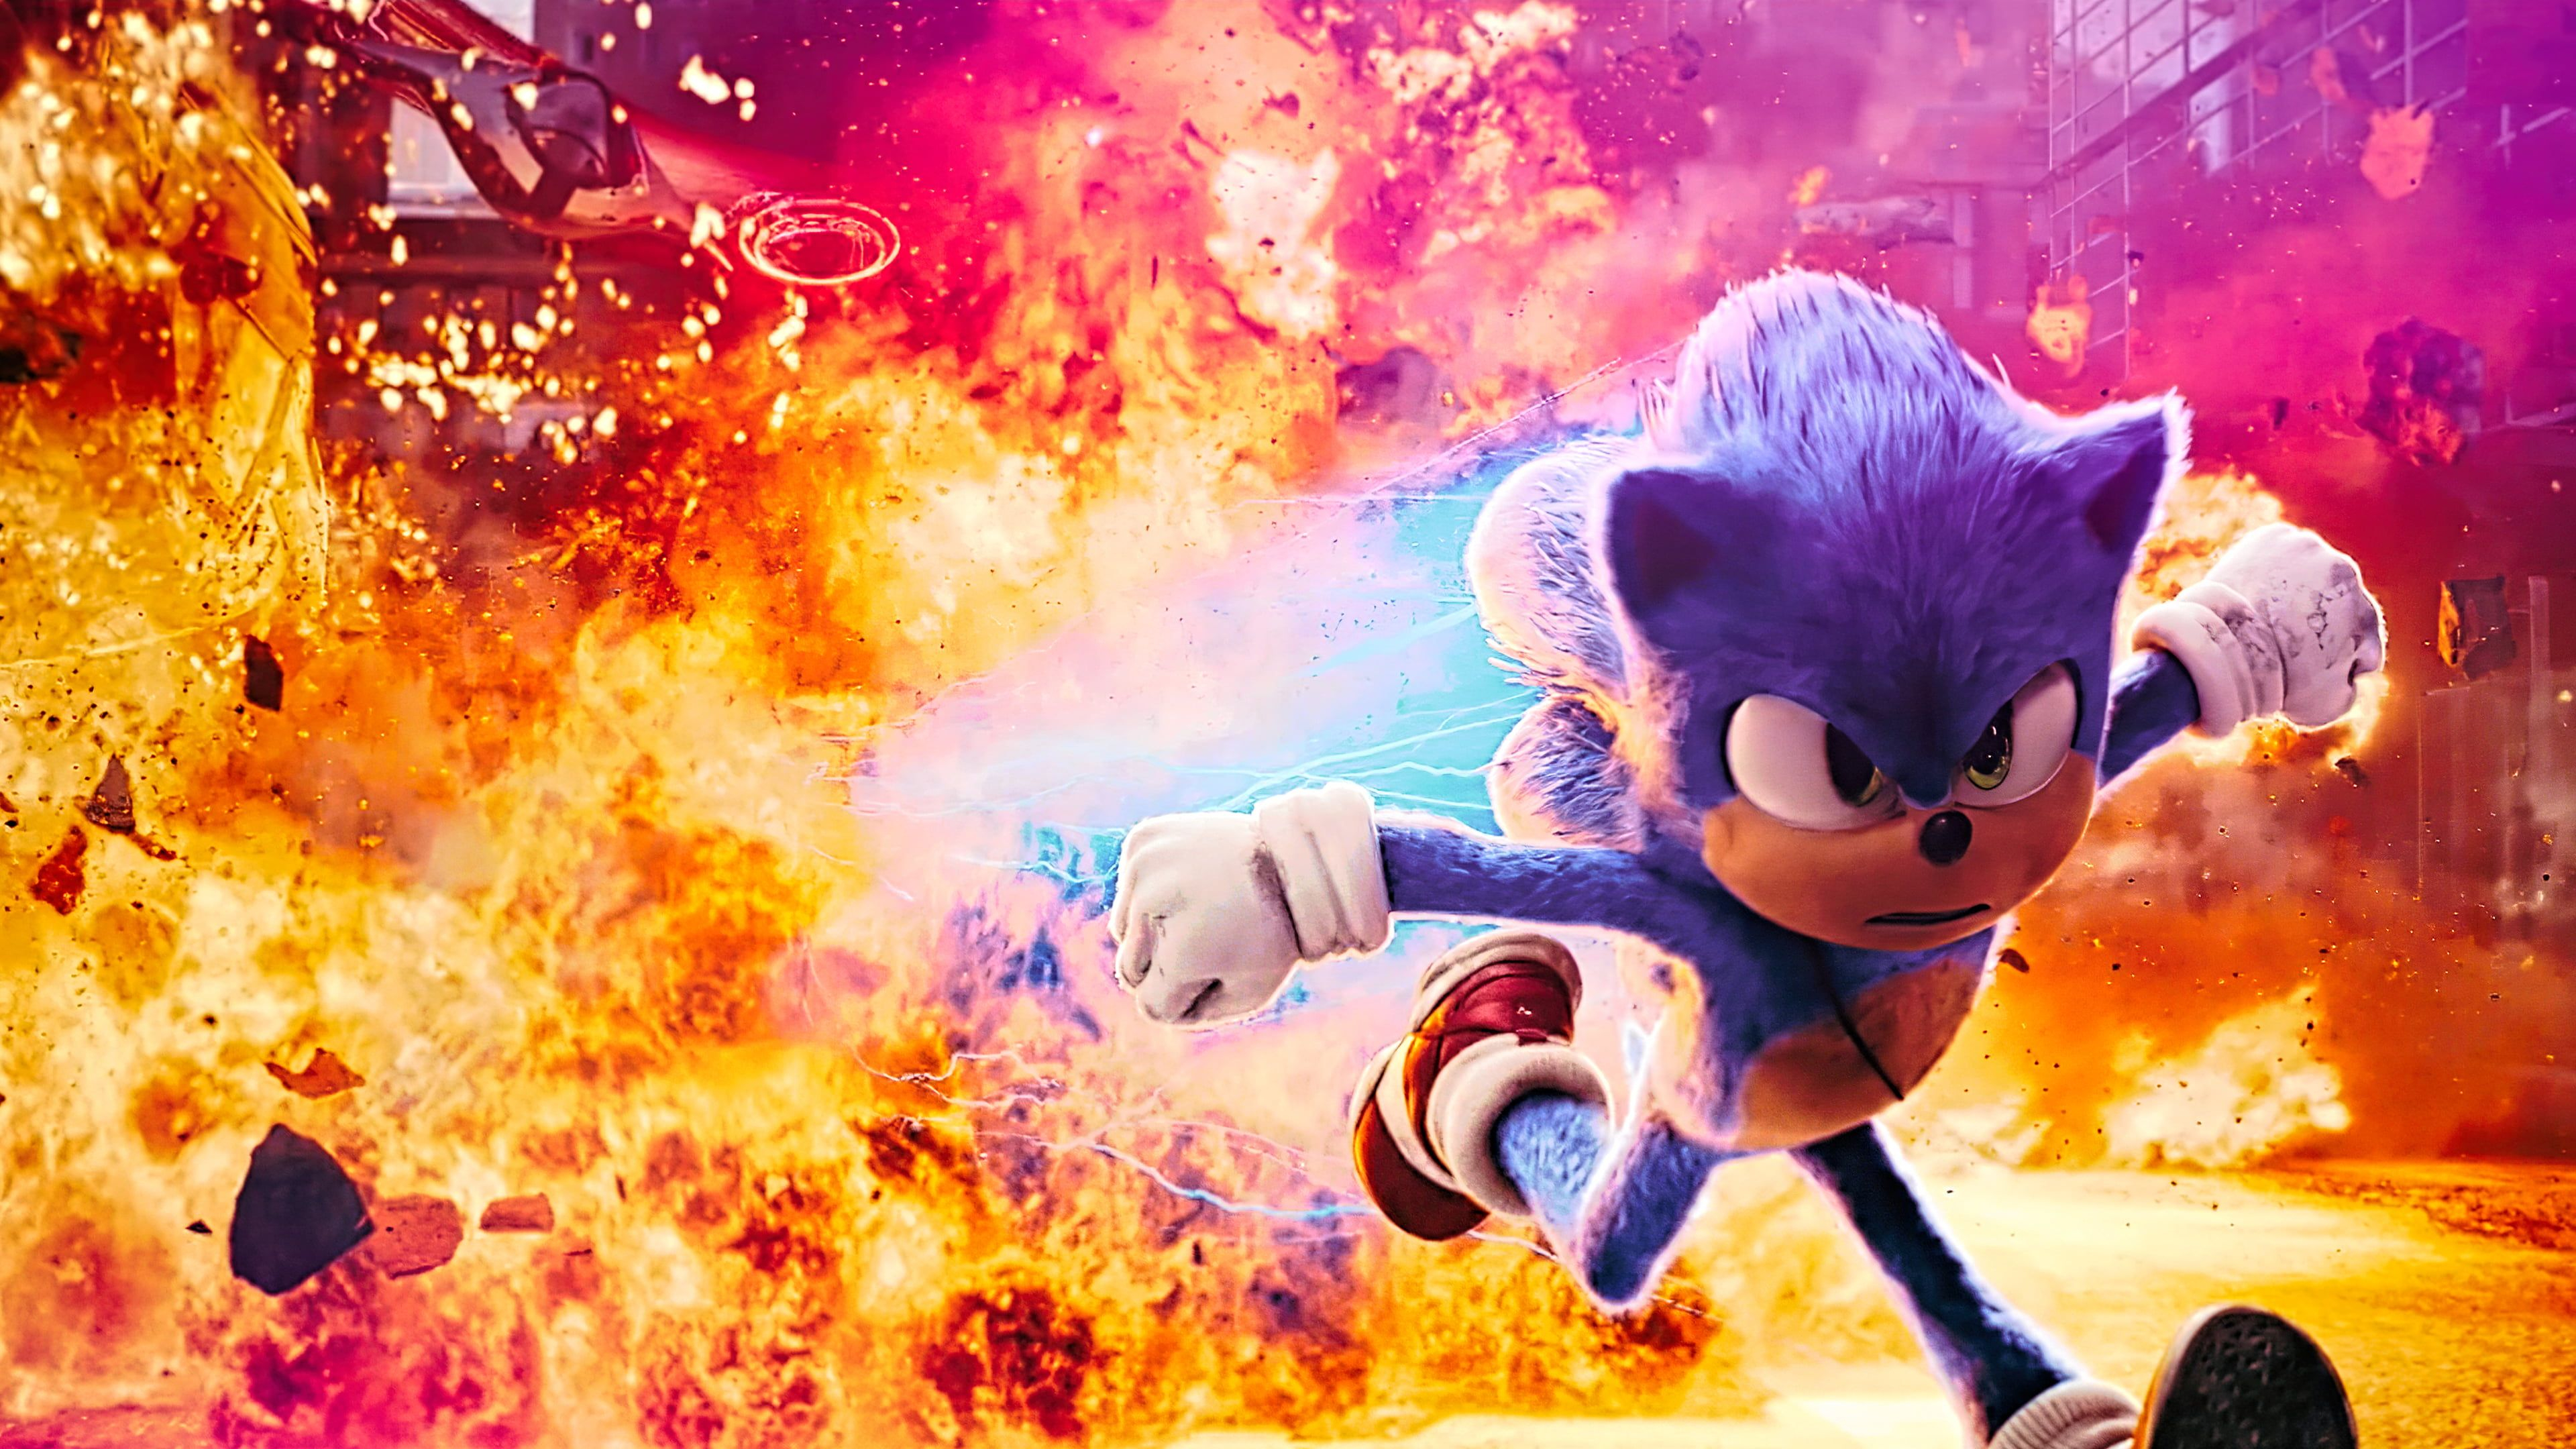 3840x2160 Sonic the Hedgehog #Sonic #2020 #CGI 3D graphics #4K #wallpaper #hdwallpaper #desktop | Fondo de pantalla de dibujos animados, Ideas de fondos de pantalla, Sonic